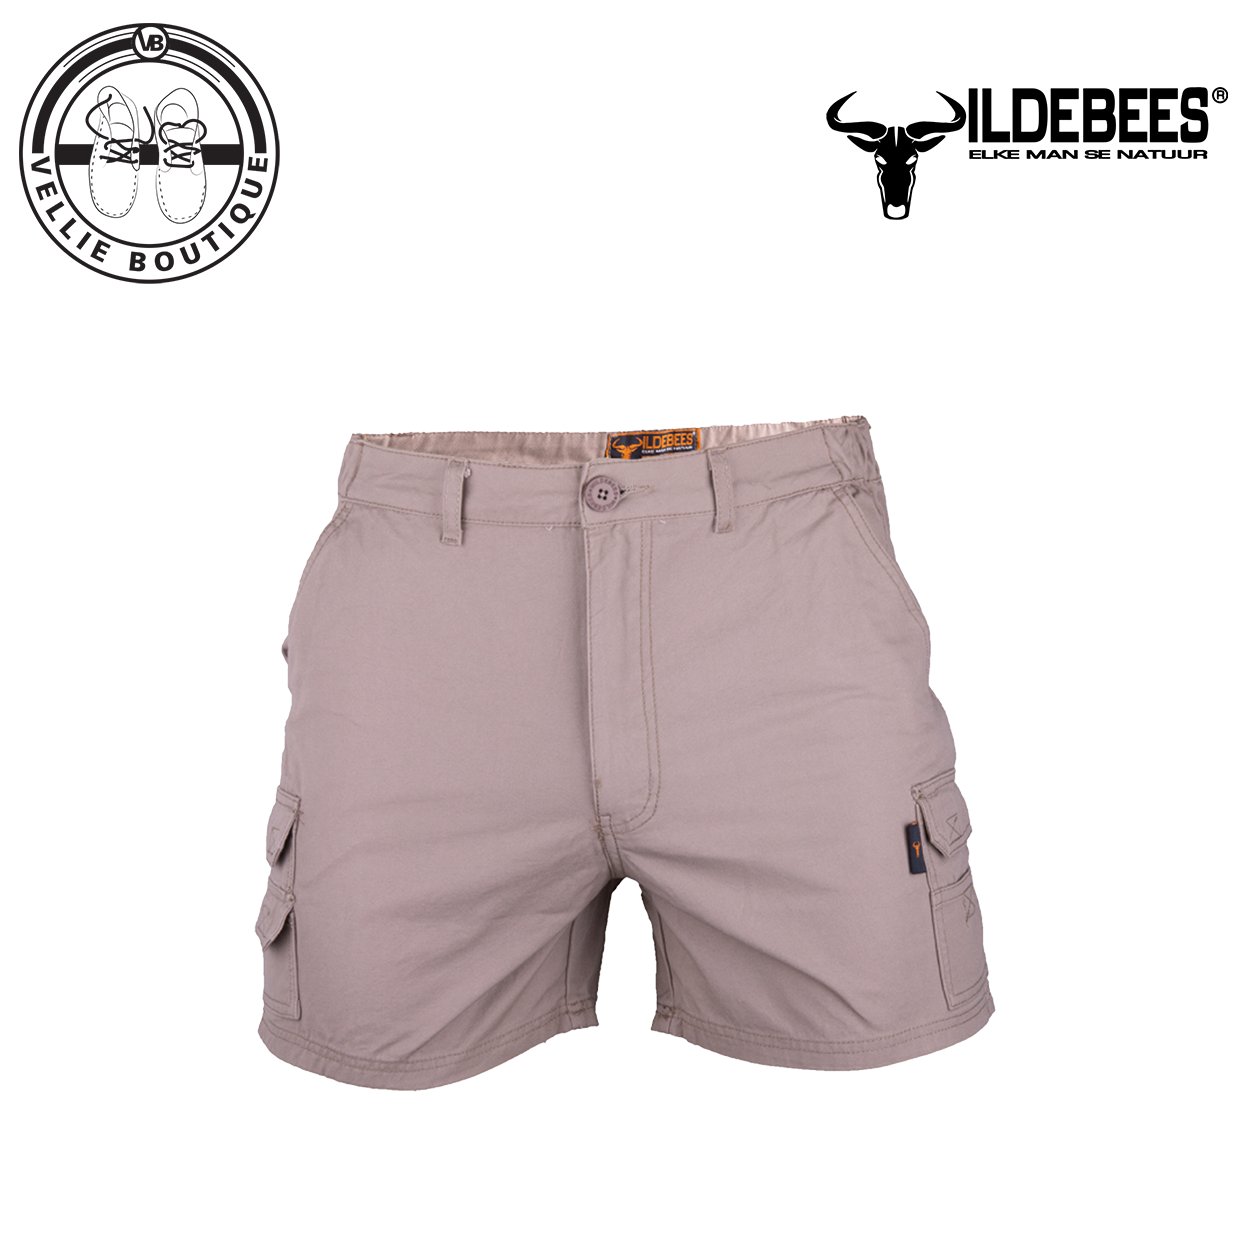 Wildebees Mens Cargo Short 12cm - Khaki